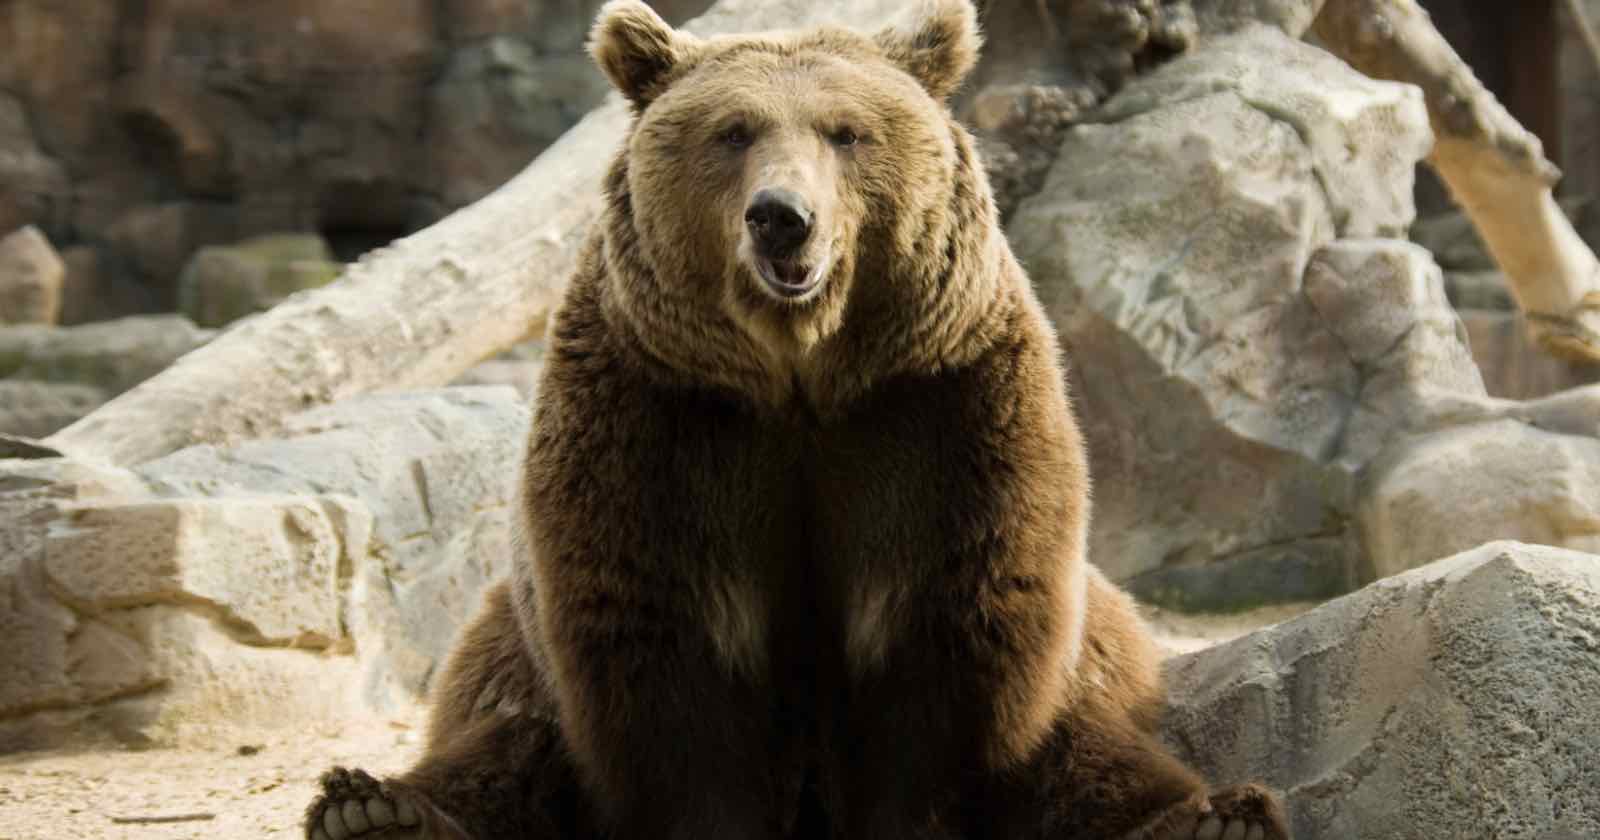 tourist mauled selfie brown bear lowered down car window